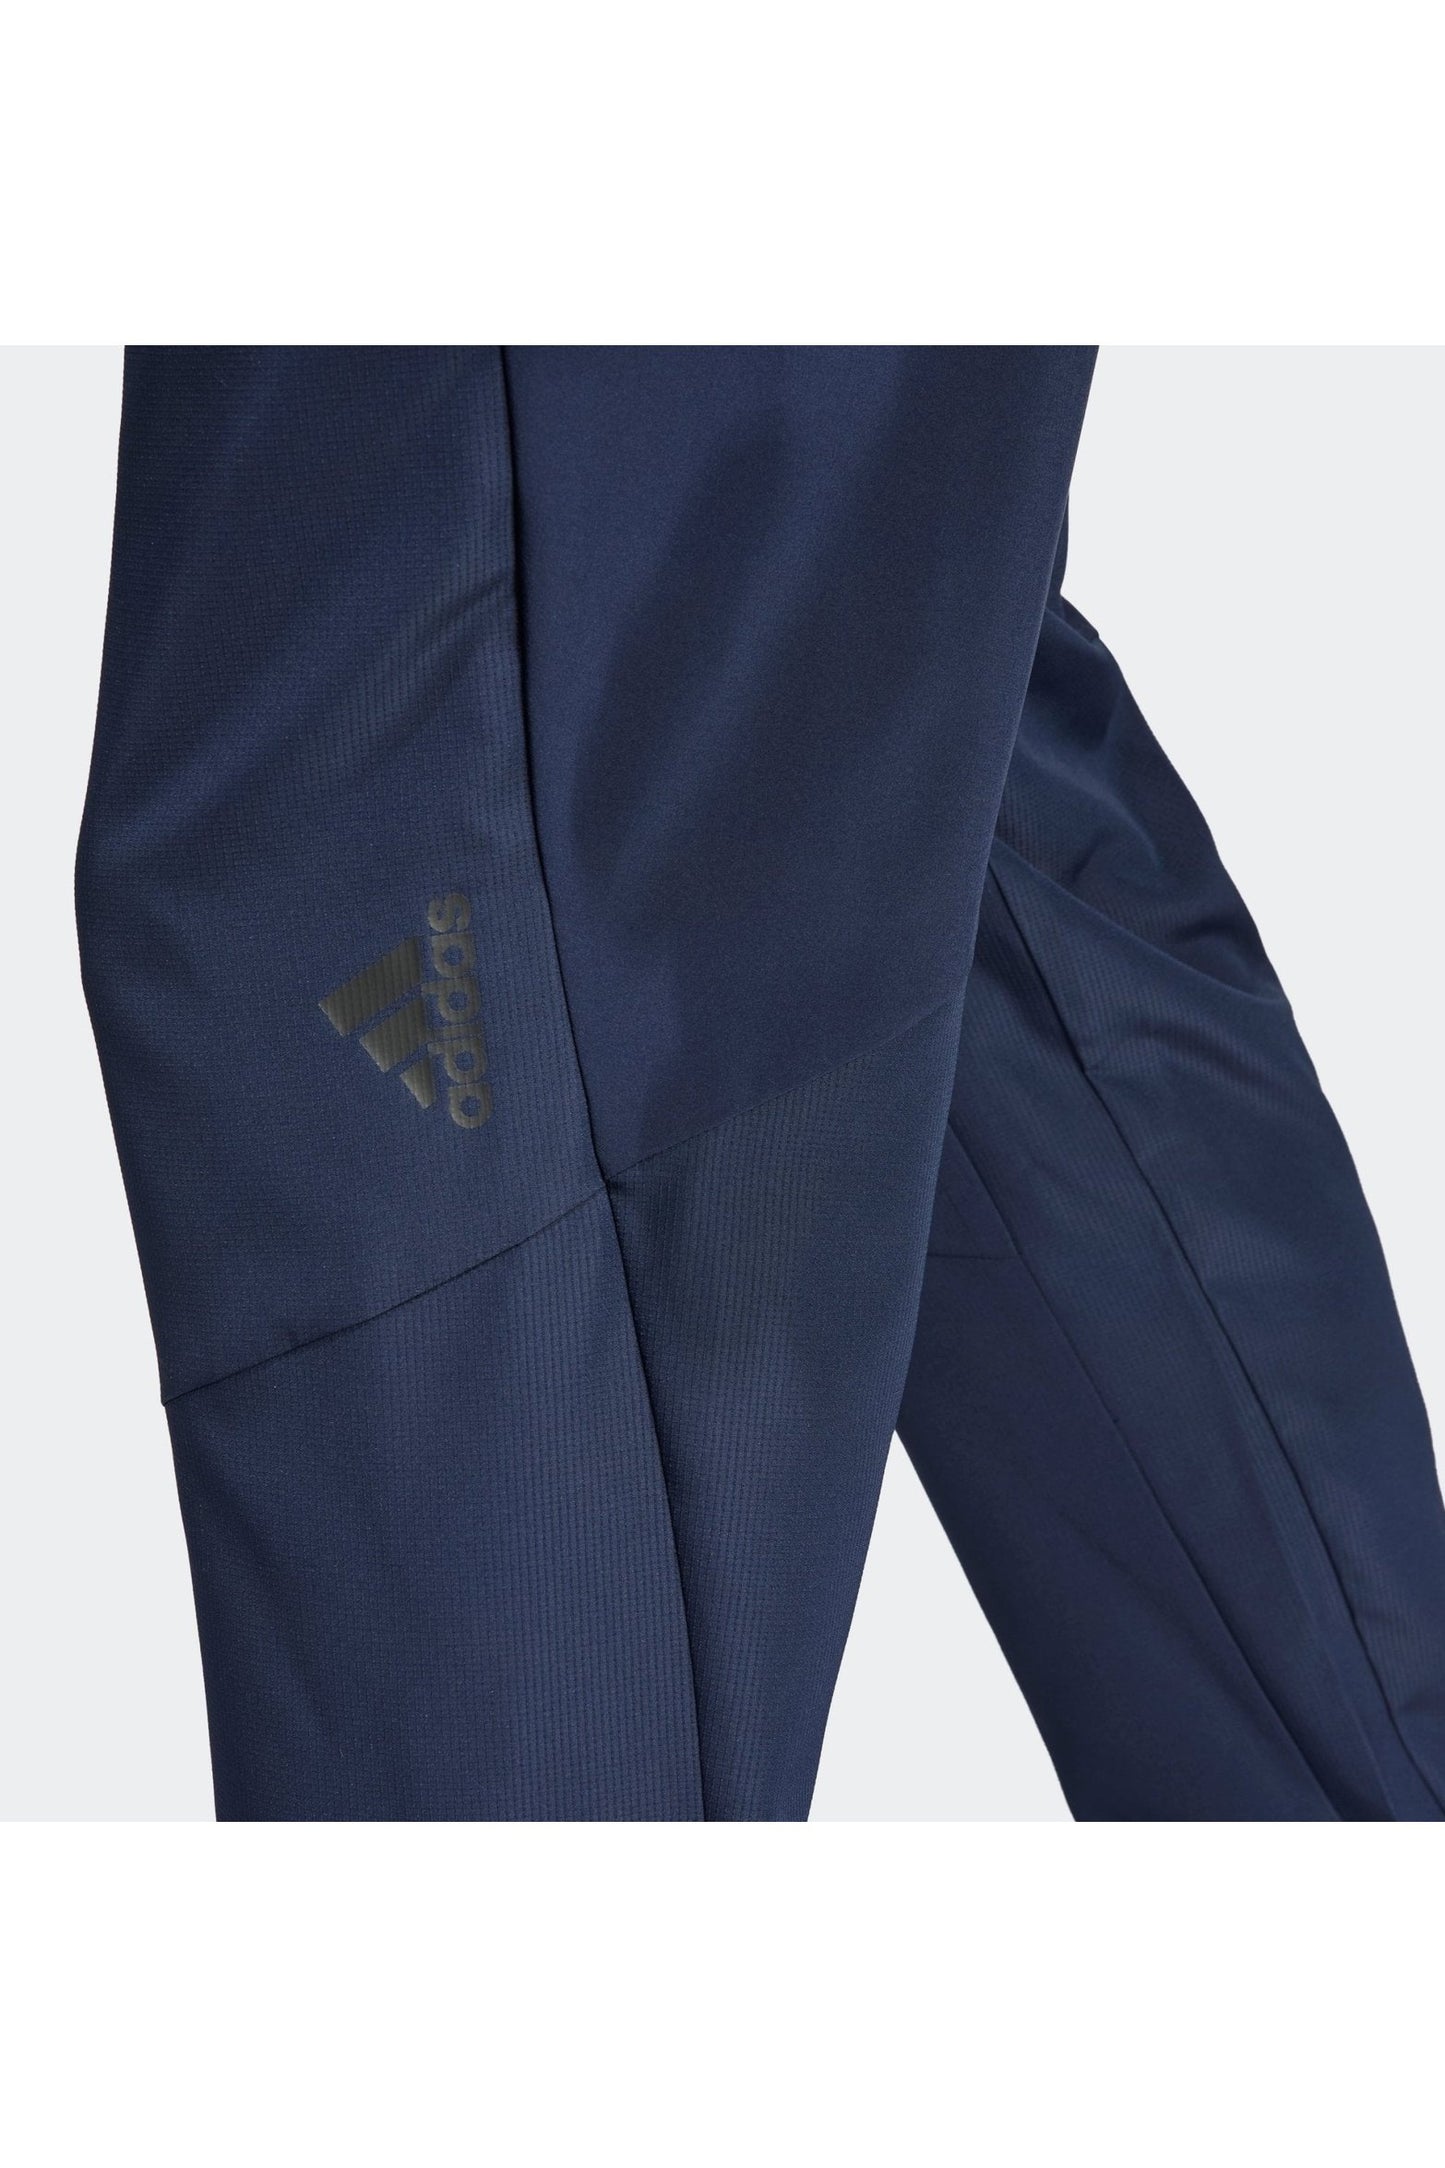 ADIDAS - מכנסיים ארוכים לגברים DESIGNED FOR MOVEMENT בצבע כחול - MASHBIR//365